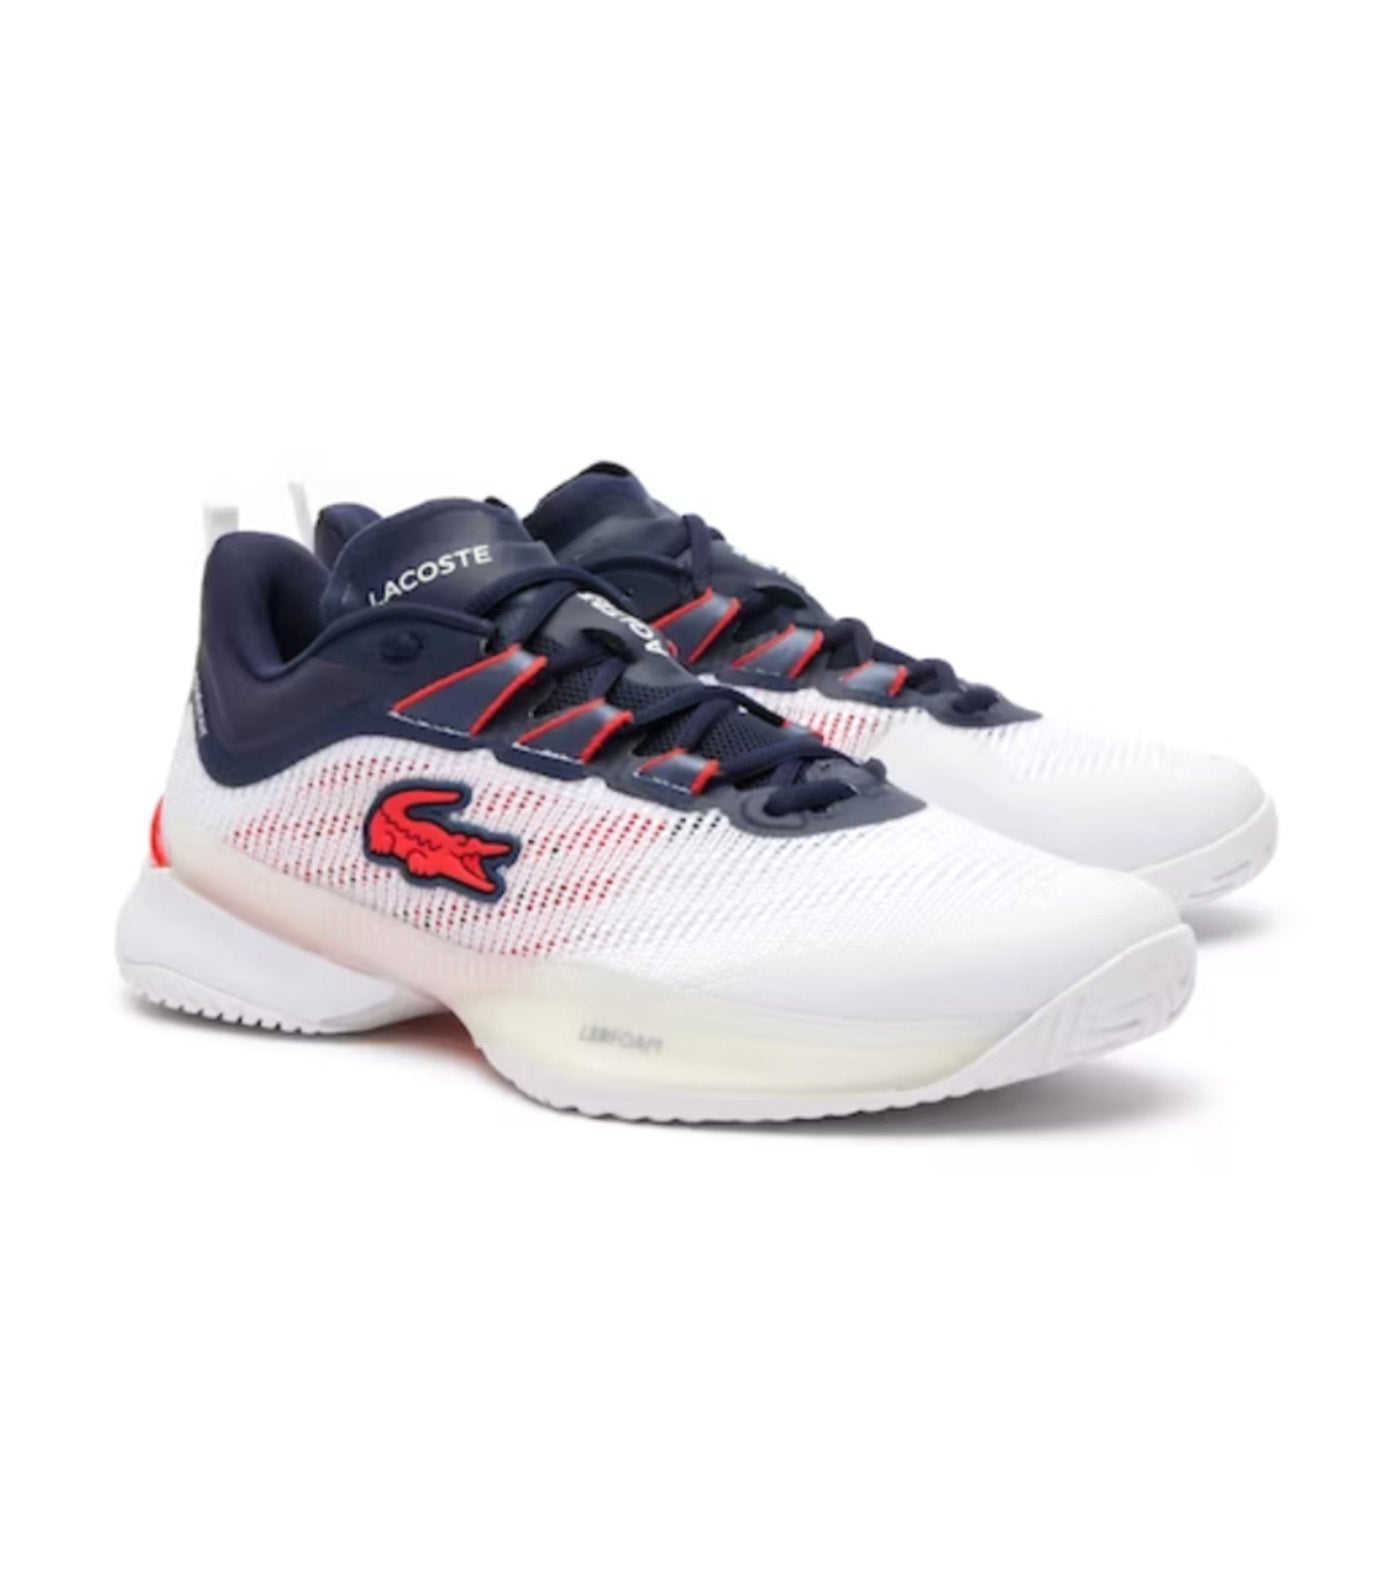 Men's AG-LT23 Ultra Textile Tennis Shoes White/Navy/Red